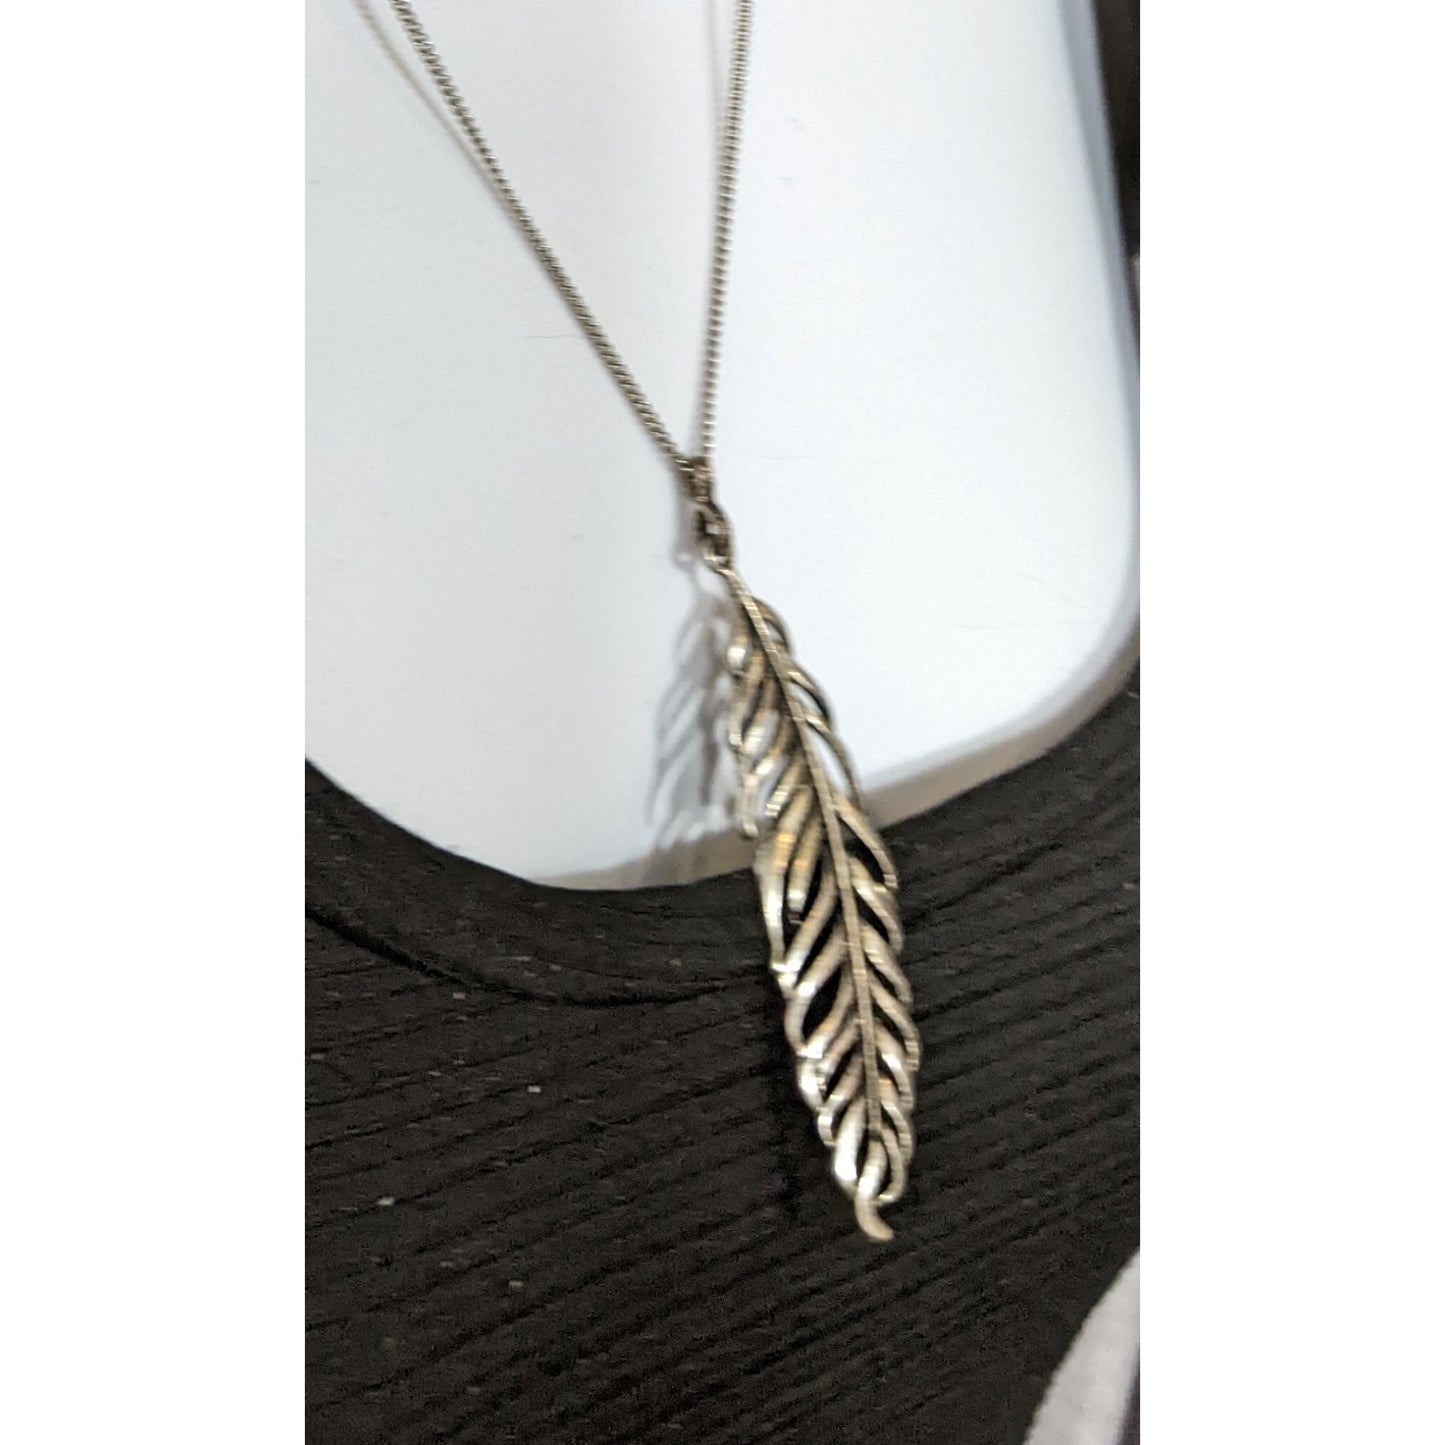 Axcess Liz Claiborne Feather Pendant Necklace